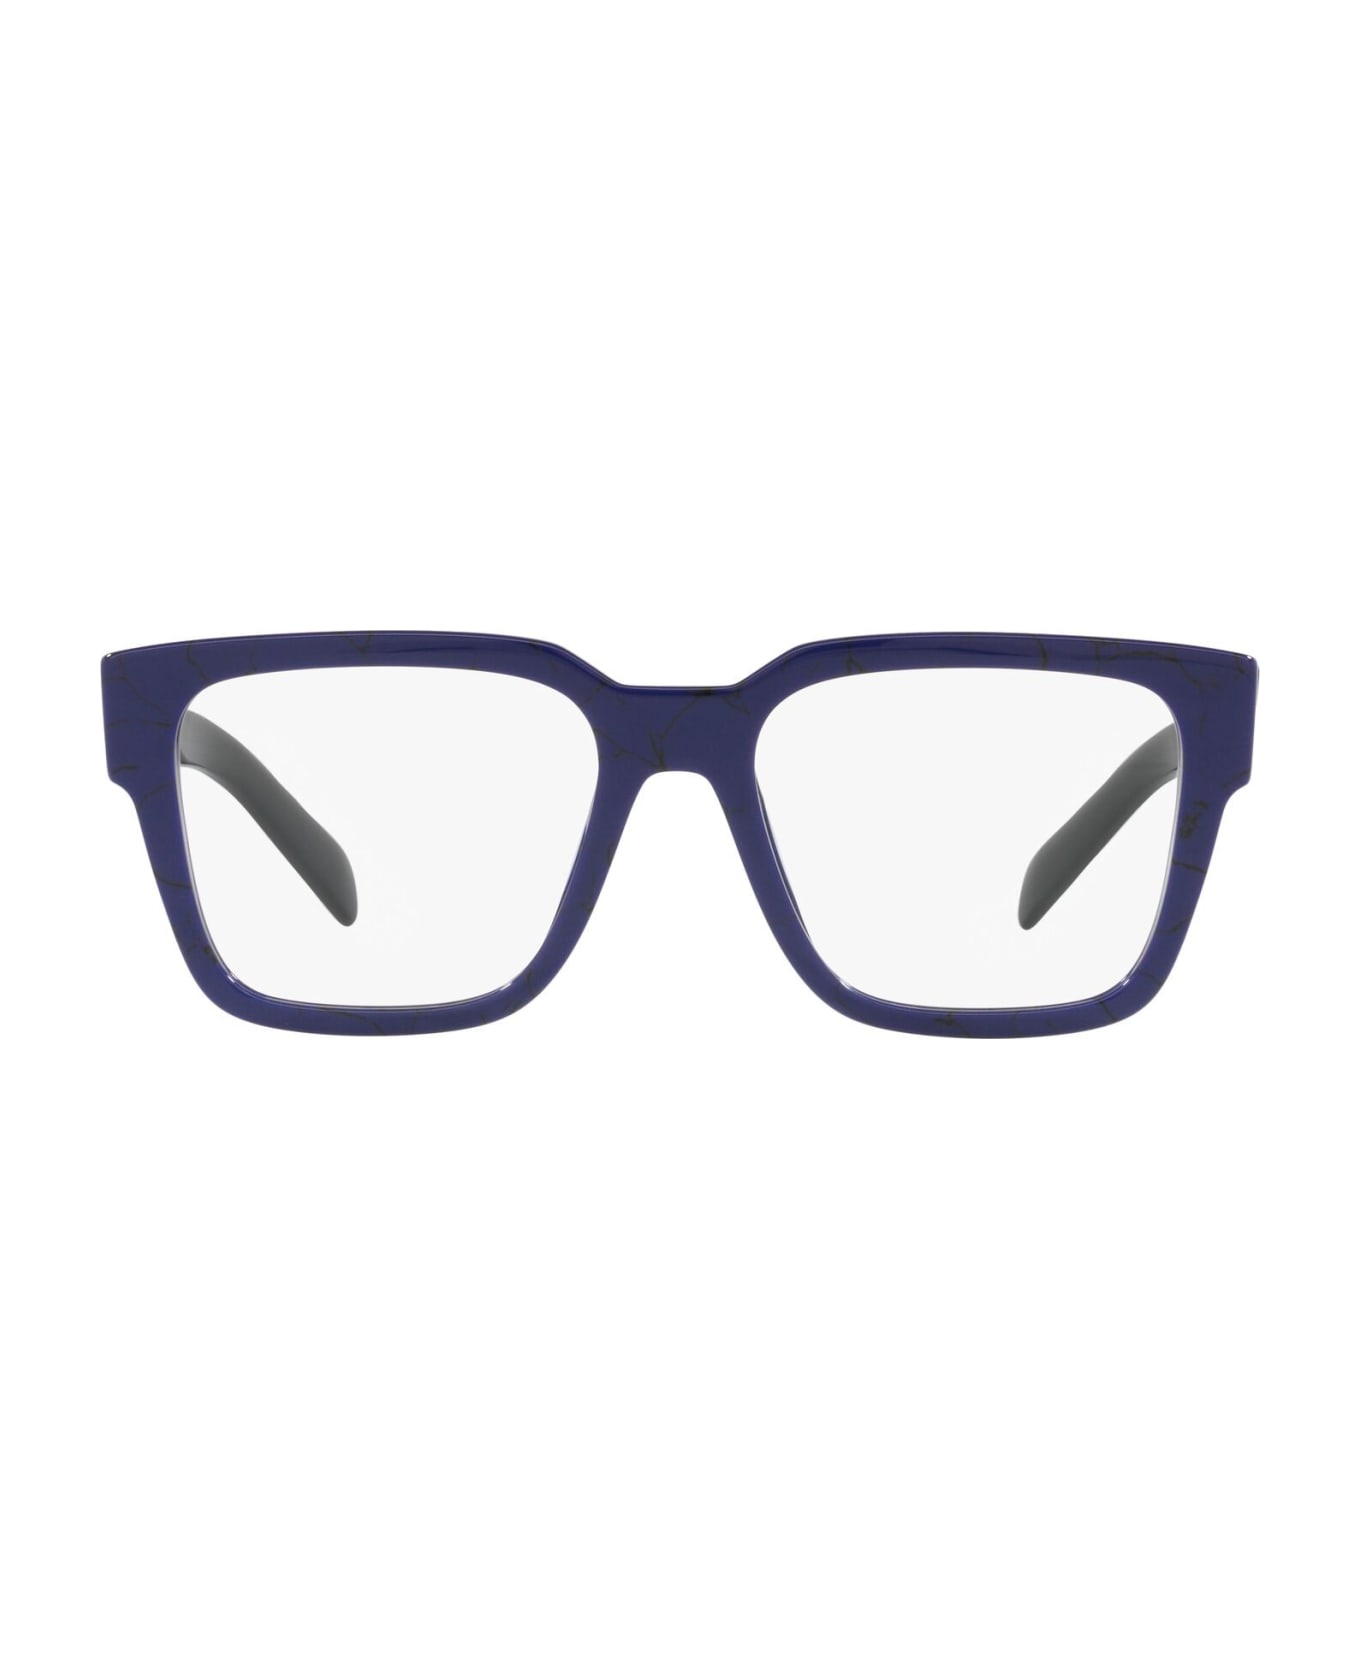 Prada Eyewear Glasses - Blu